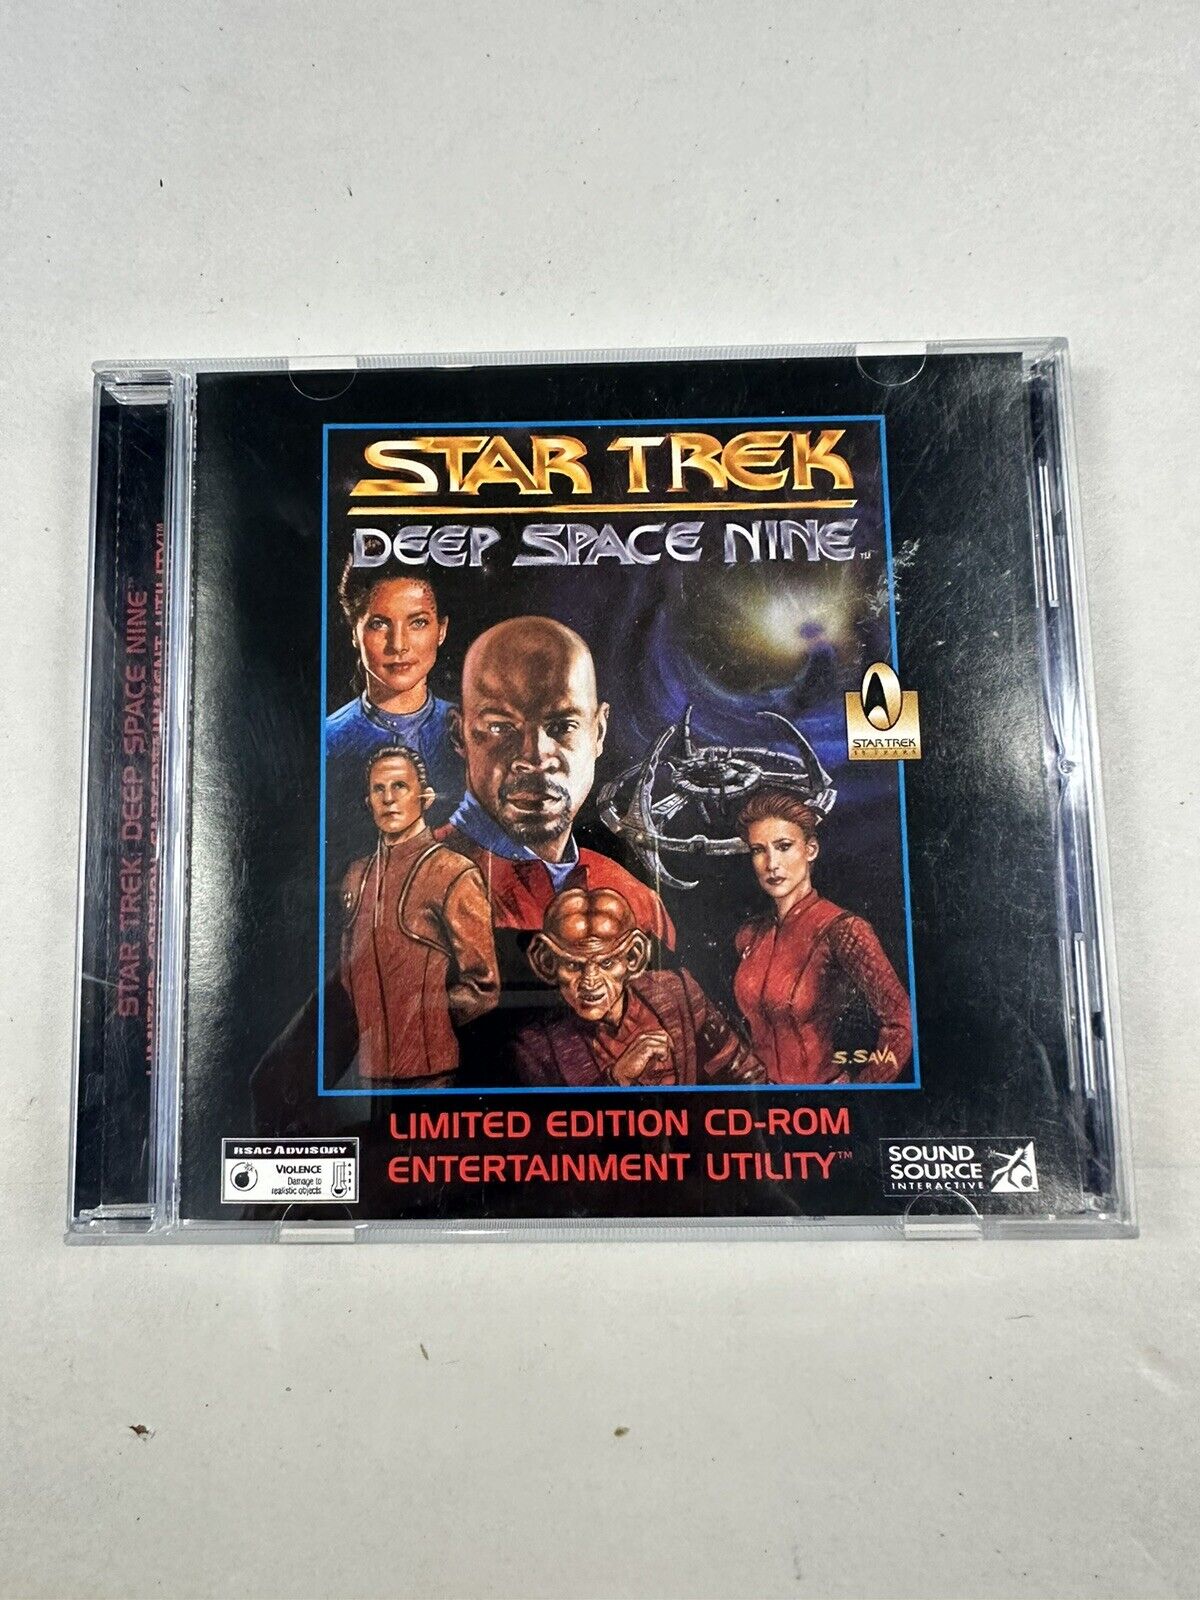 STAR TREK: DEEP SPACE NINE 9 Limited Edition Entertainment Utility / CD-ROM / PC